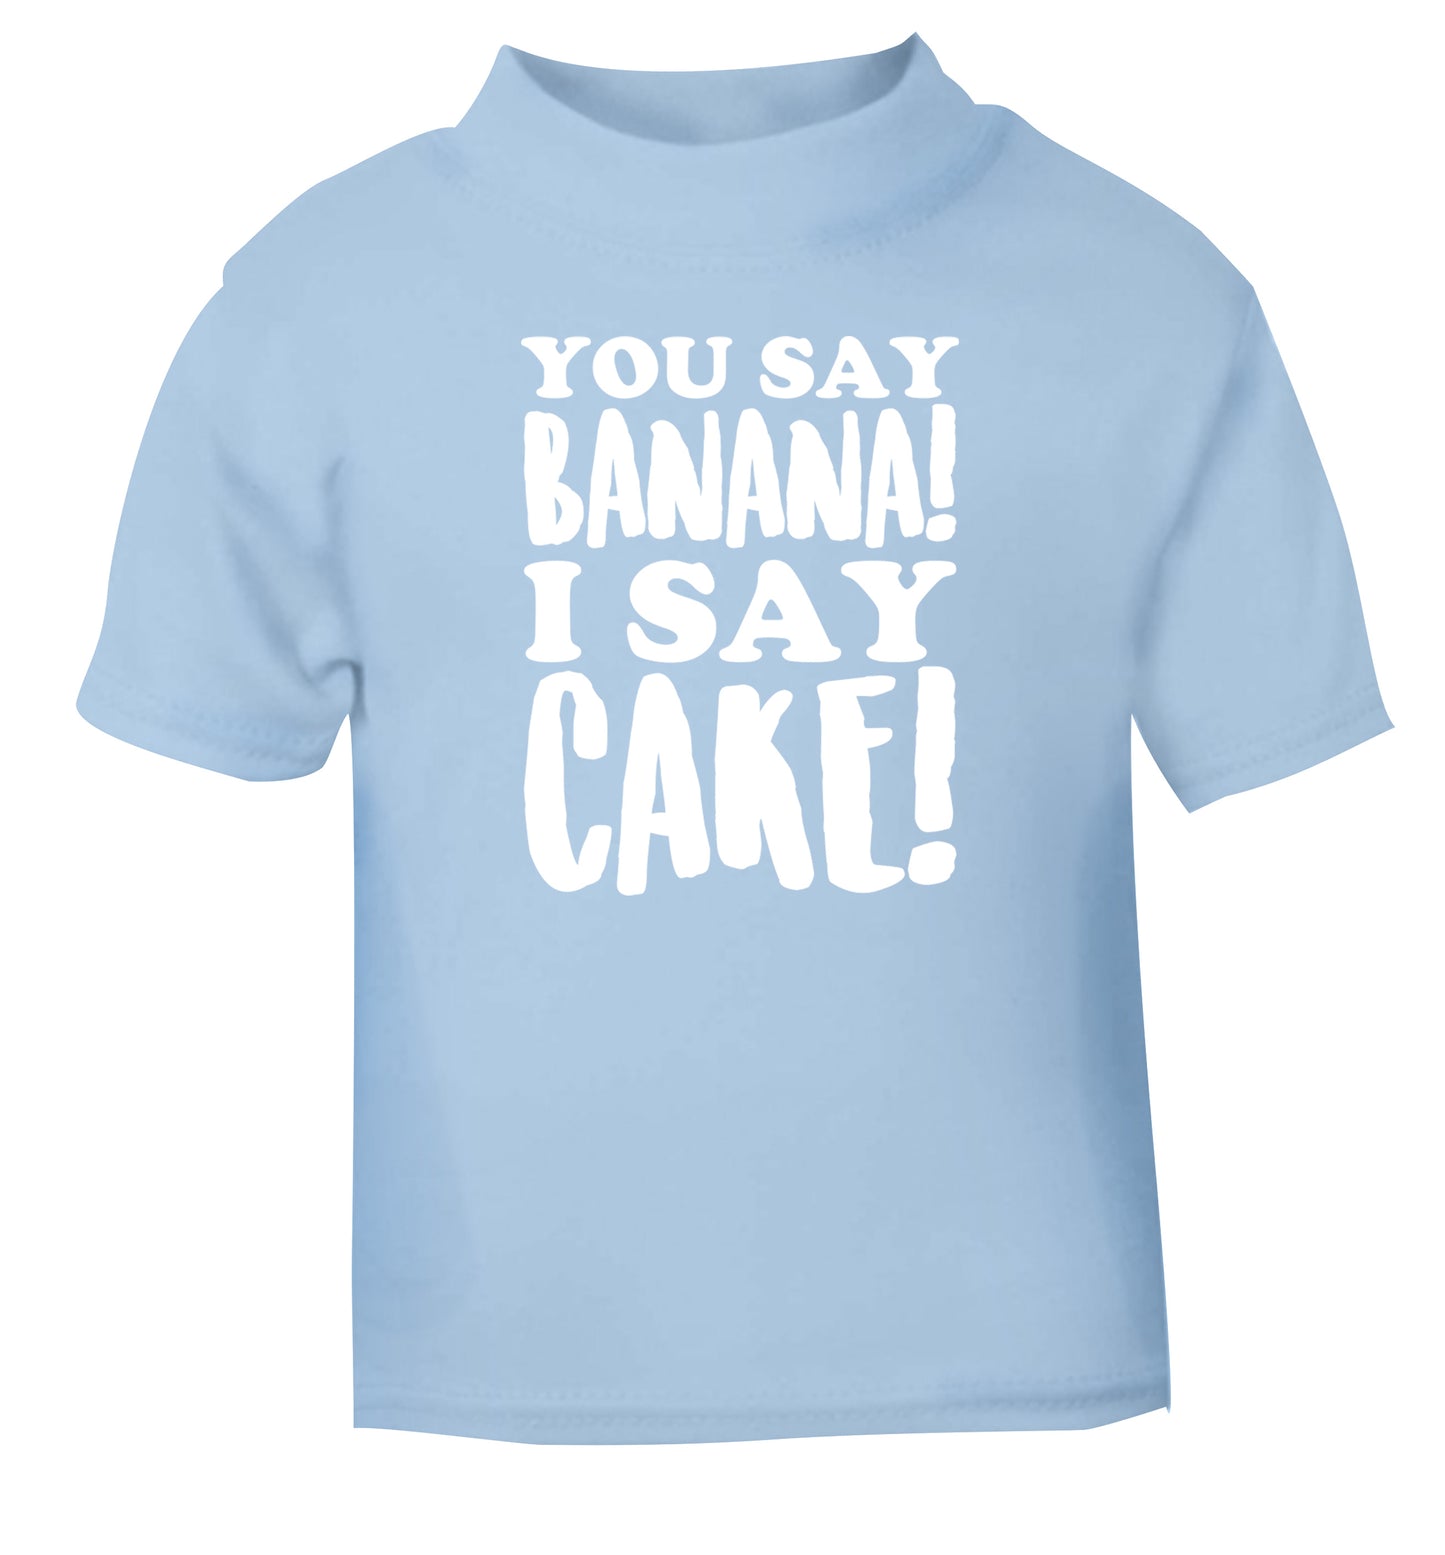 You say banana I say cake! light blue Baby Toddler Tshirt 2 Years